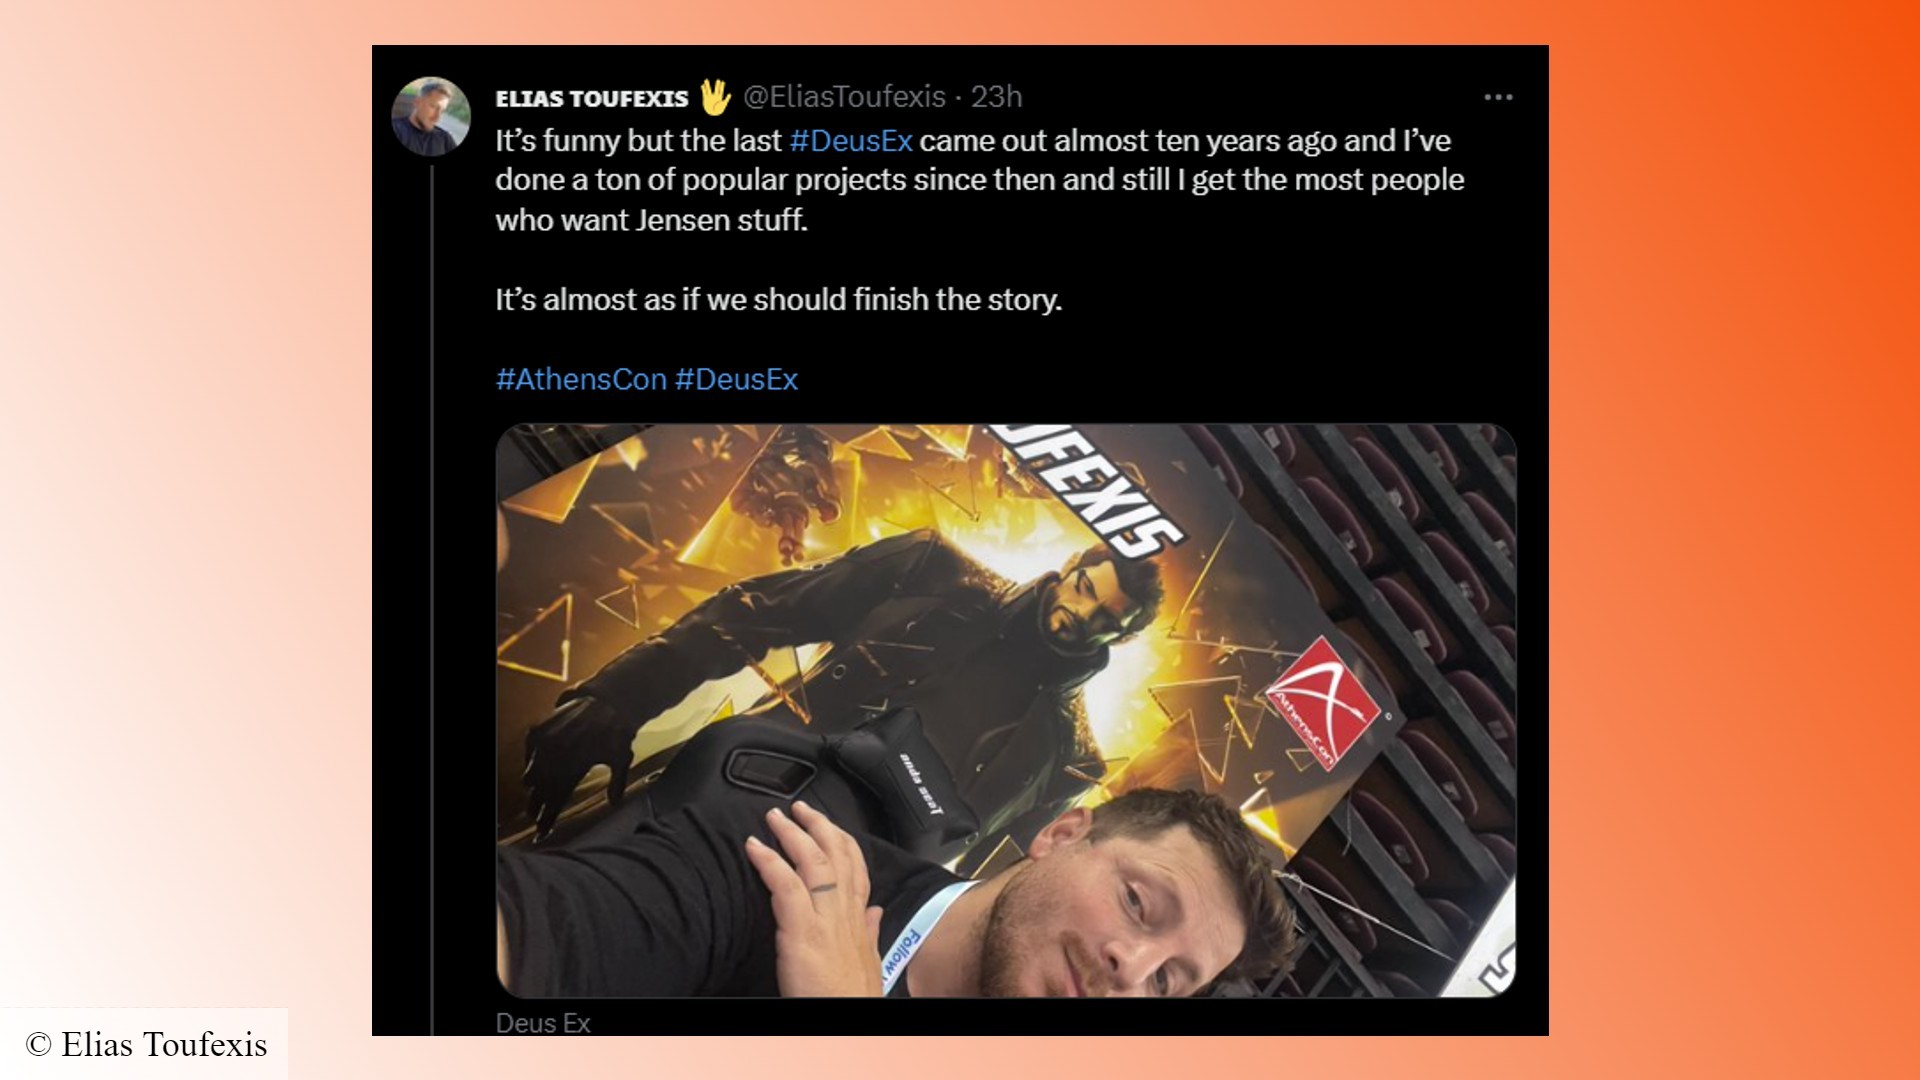 Yeni Deus Ex oyunu: Deus Ex'de Adam Jensen'in seslendirme sanatçısı Elias Toufexis'ten bir tweet